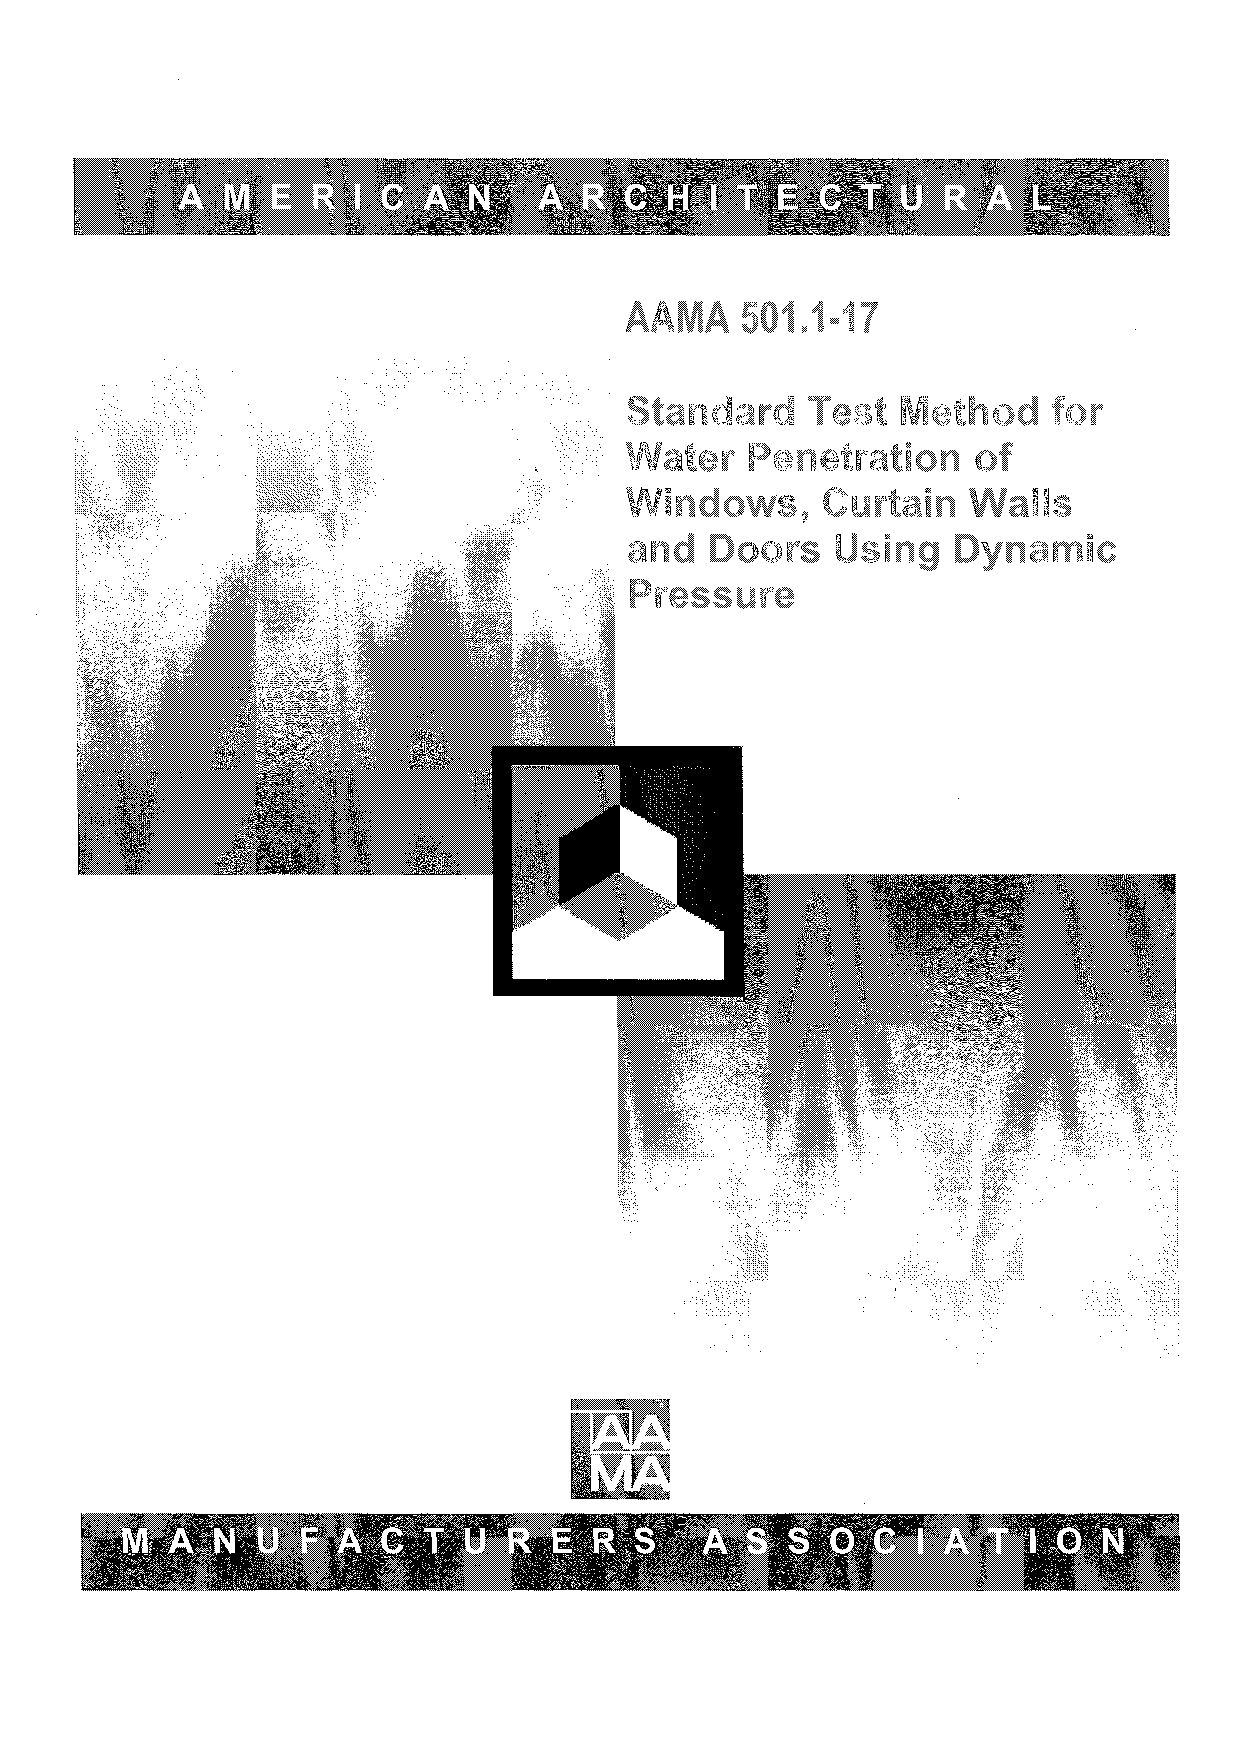 AAMA 501.1-2017